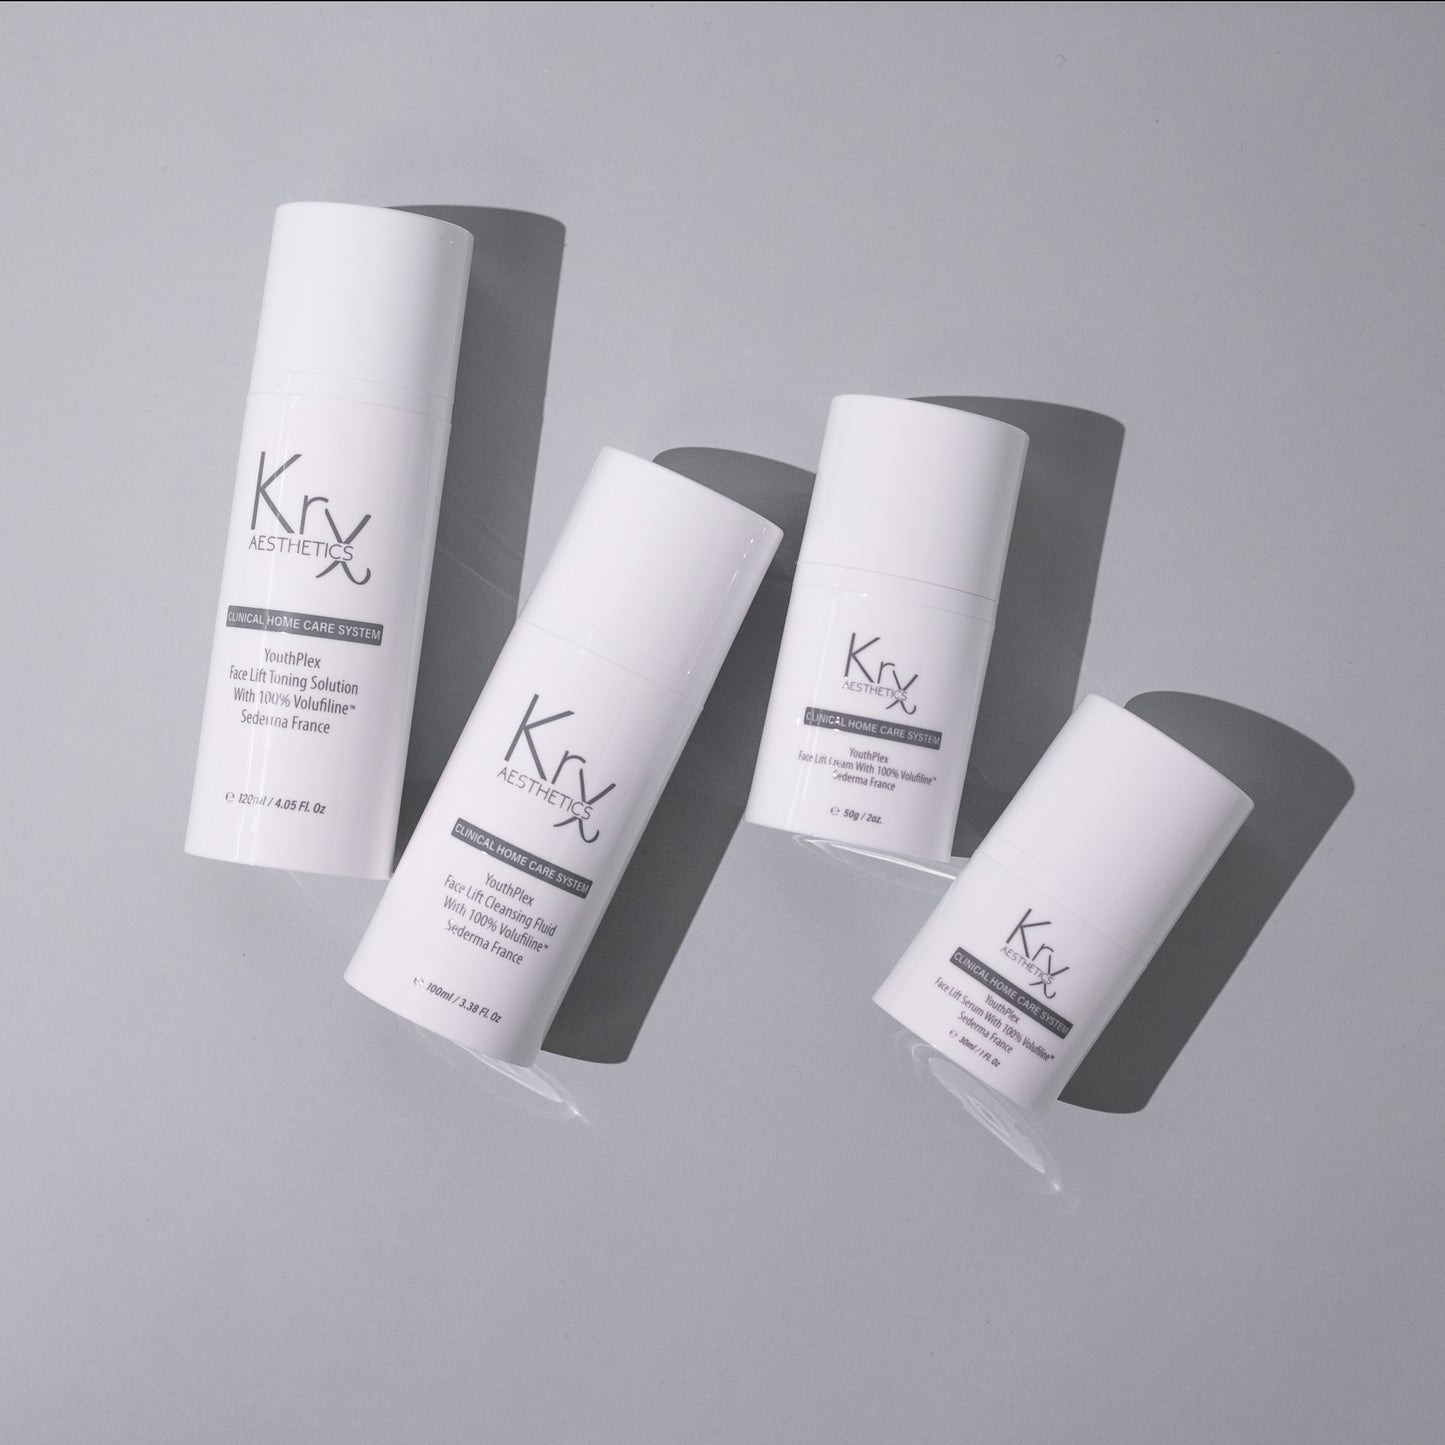 KrX Youthplex Anti-Aging Skincare Bundle